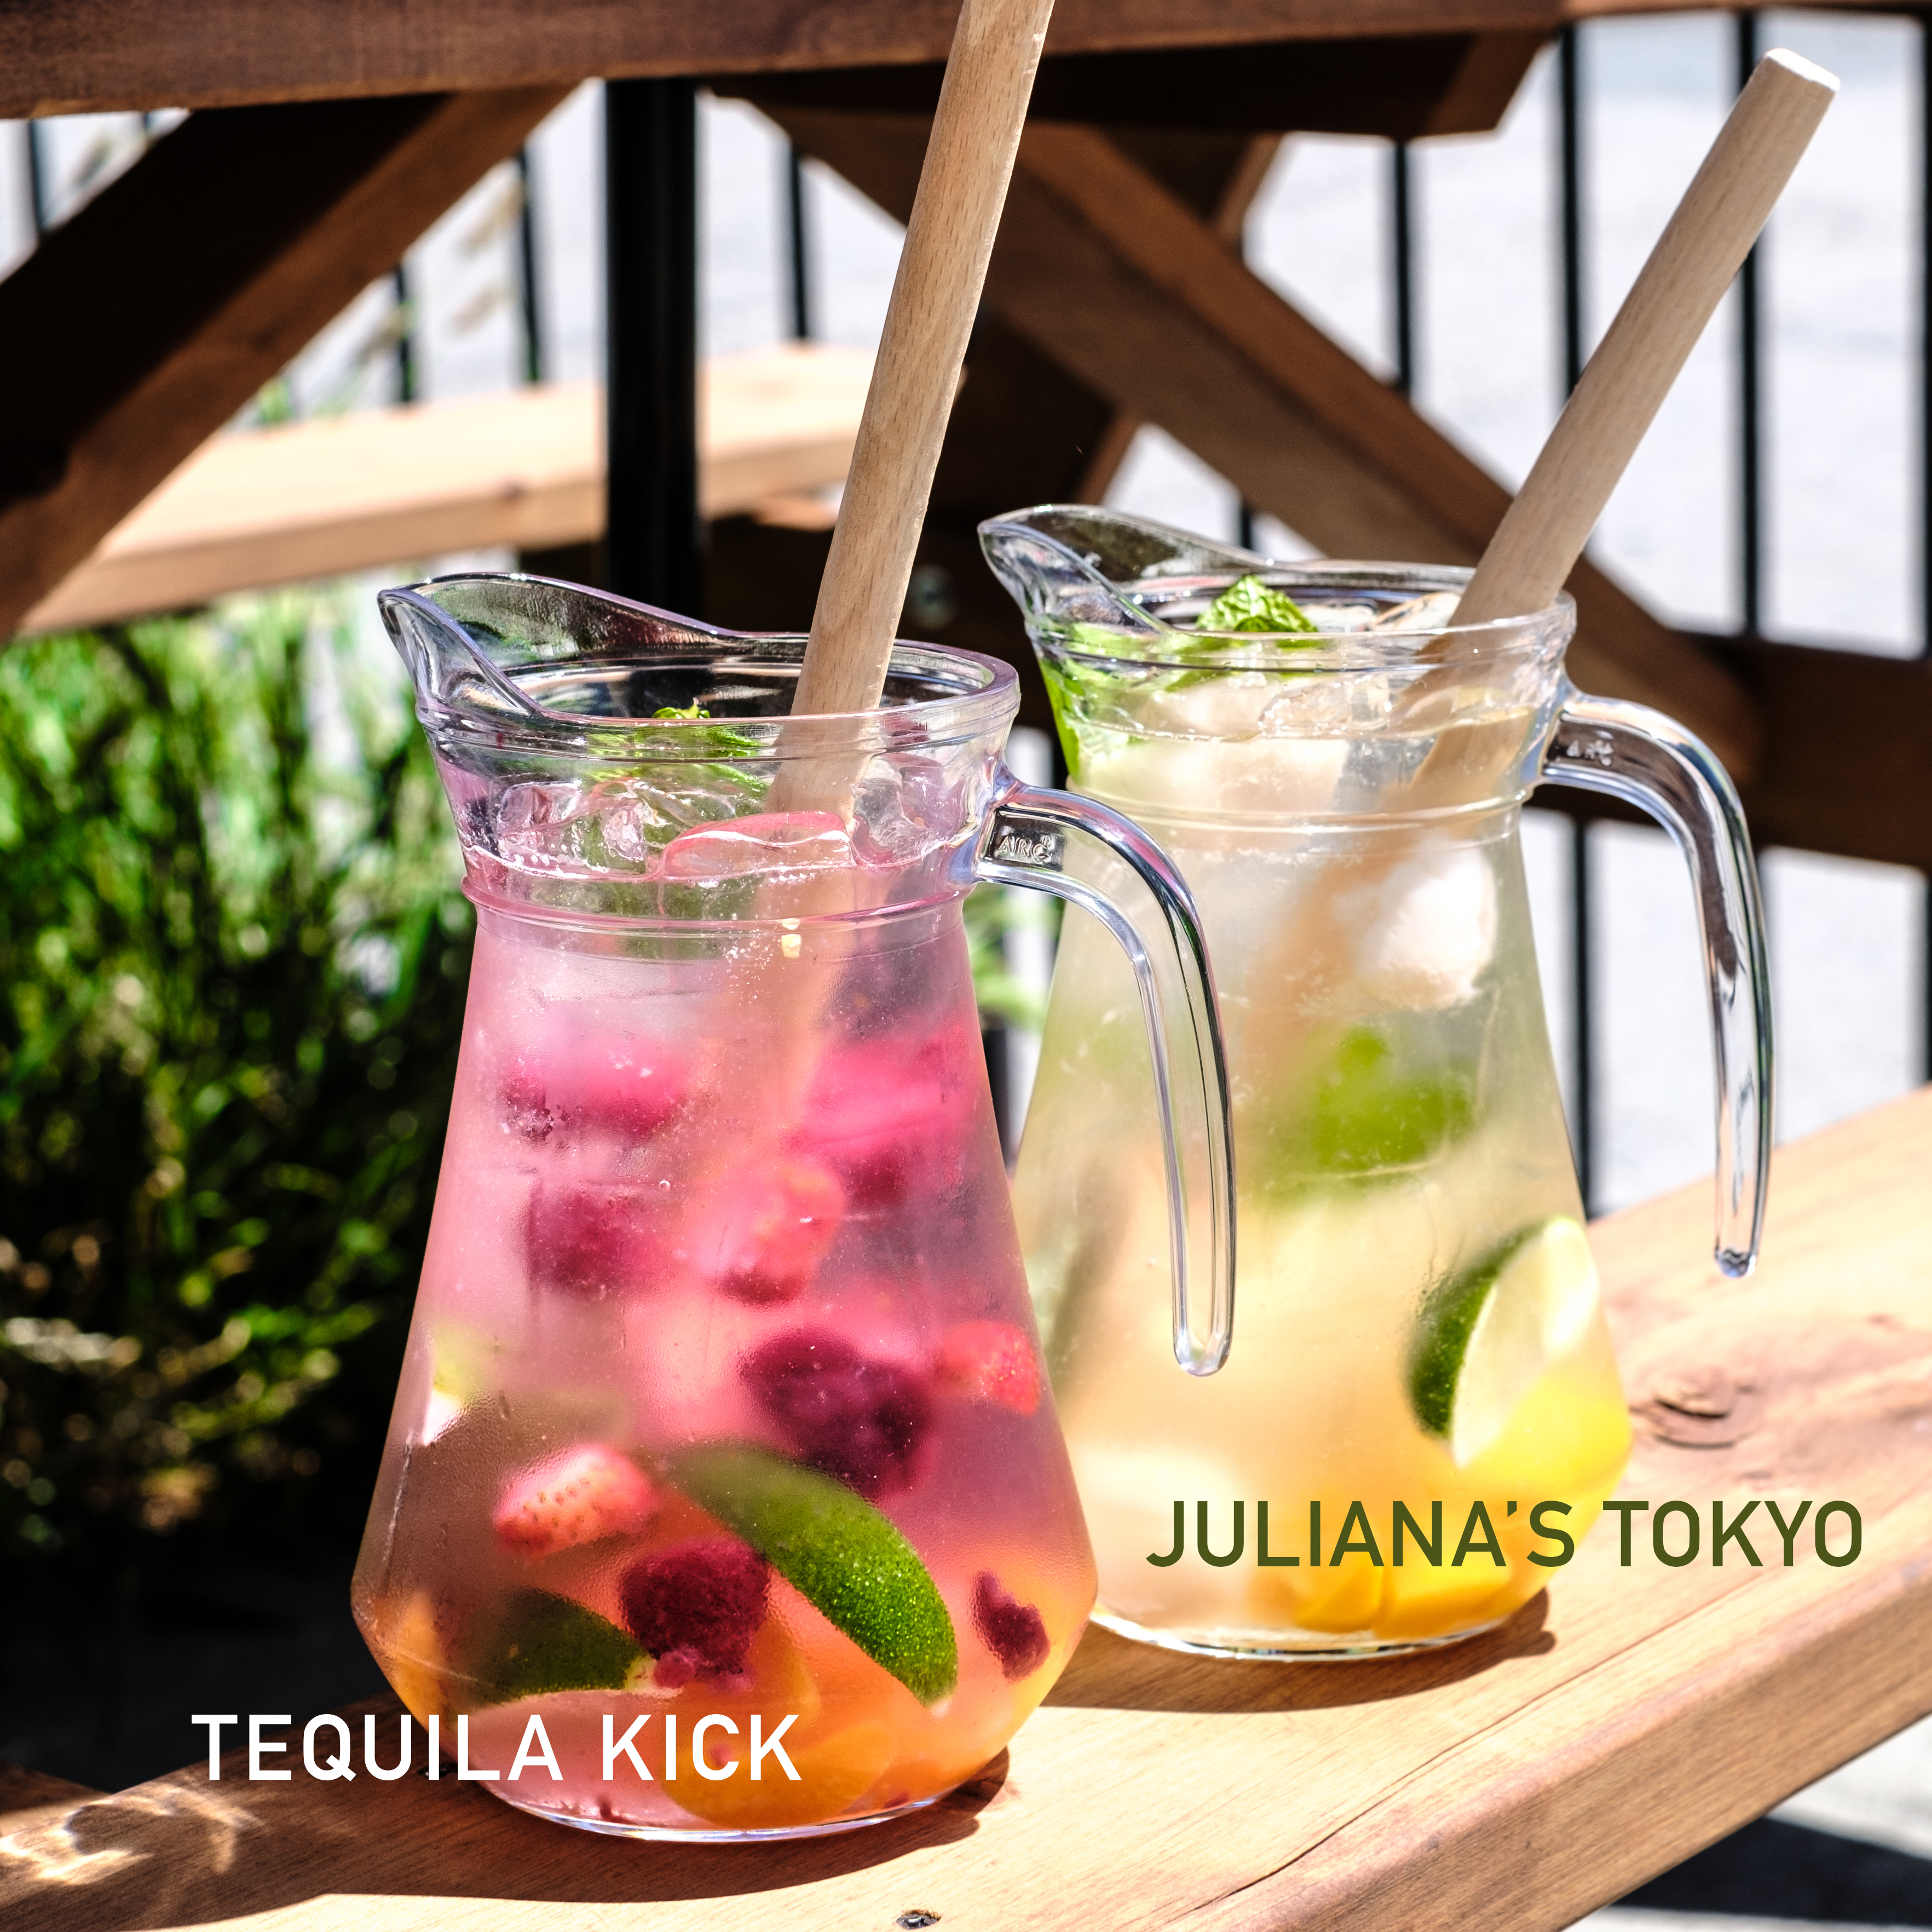 Juliana's Tokyo & Tequila Kick